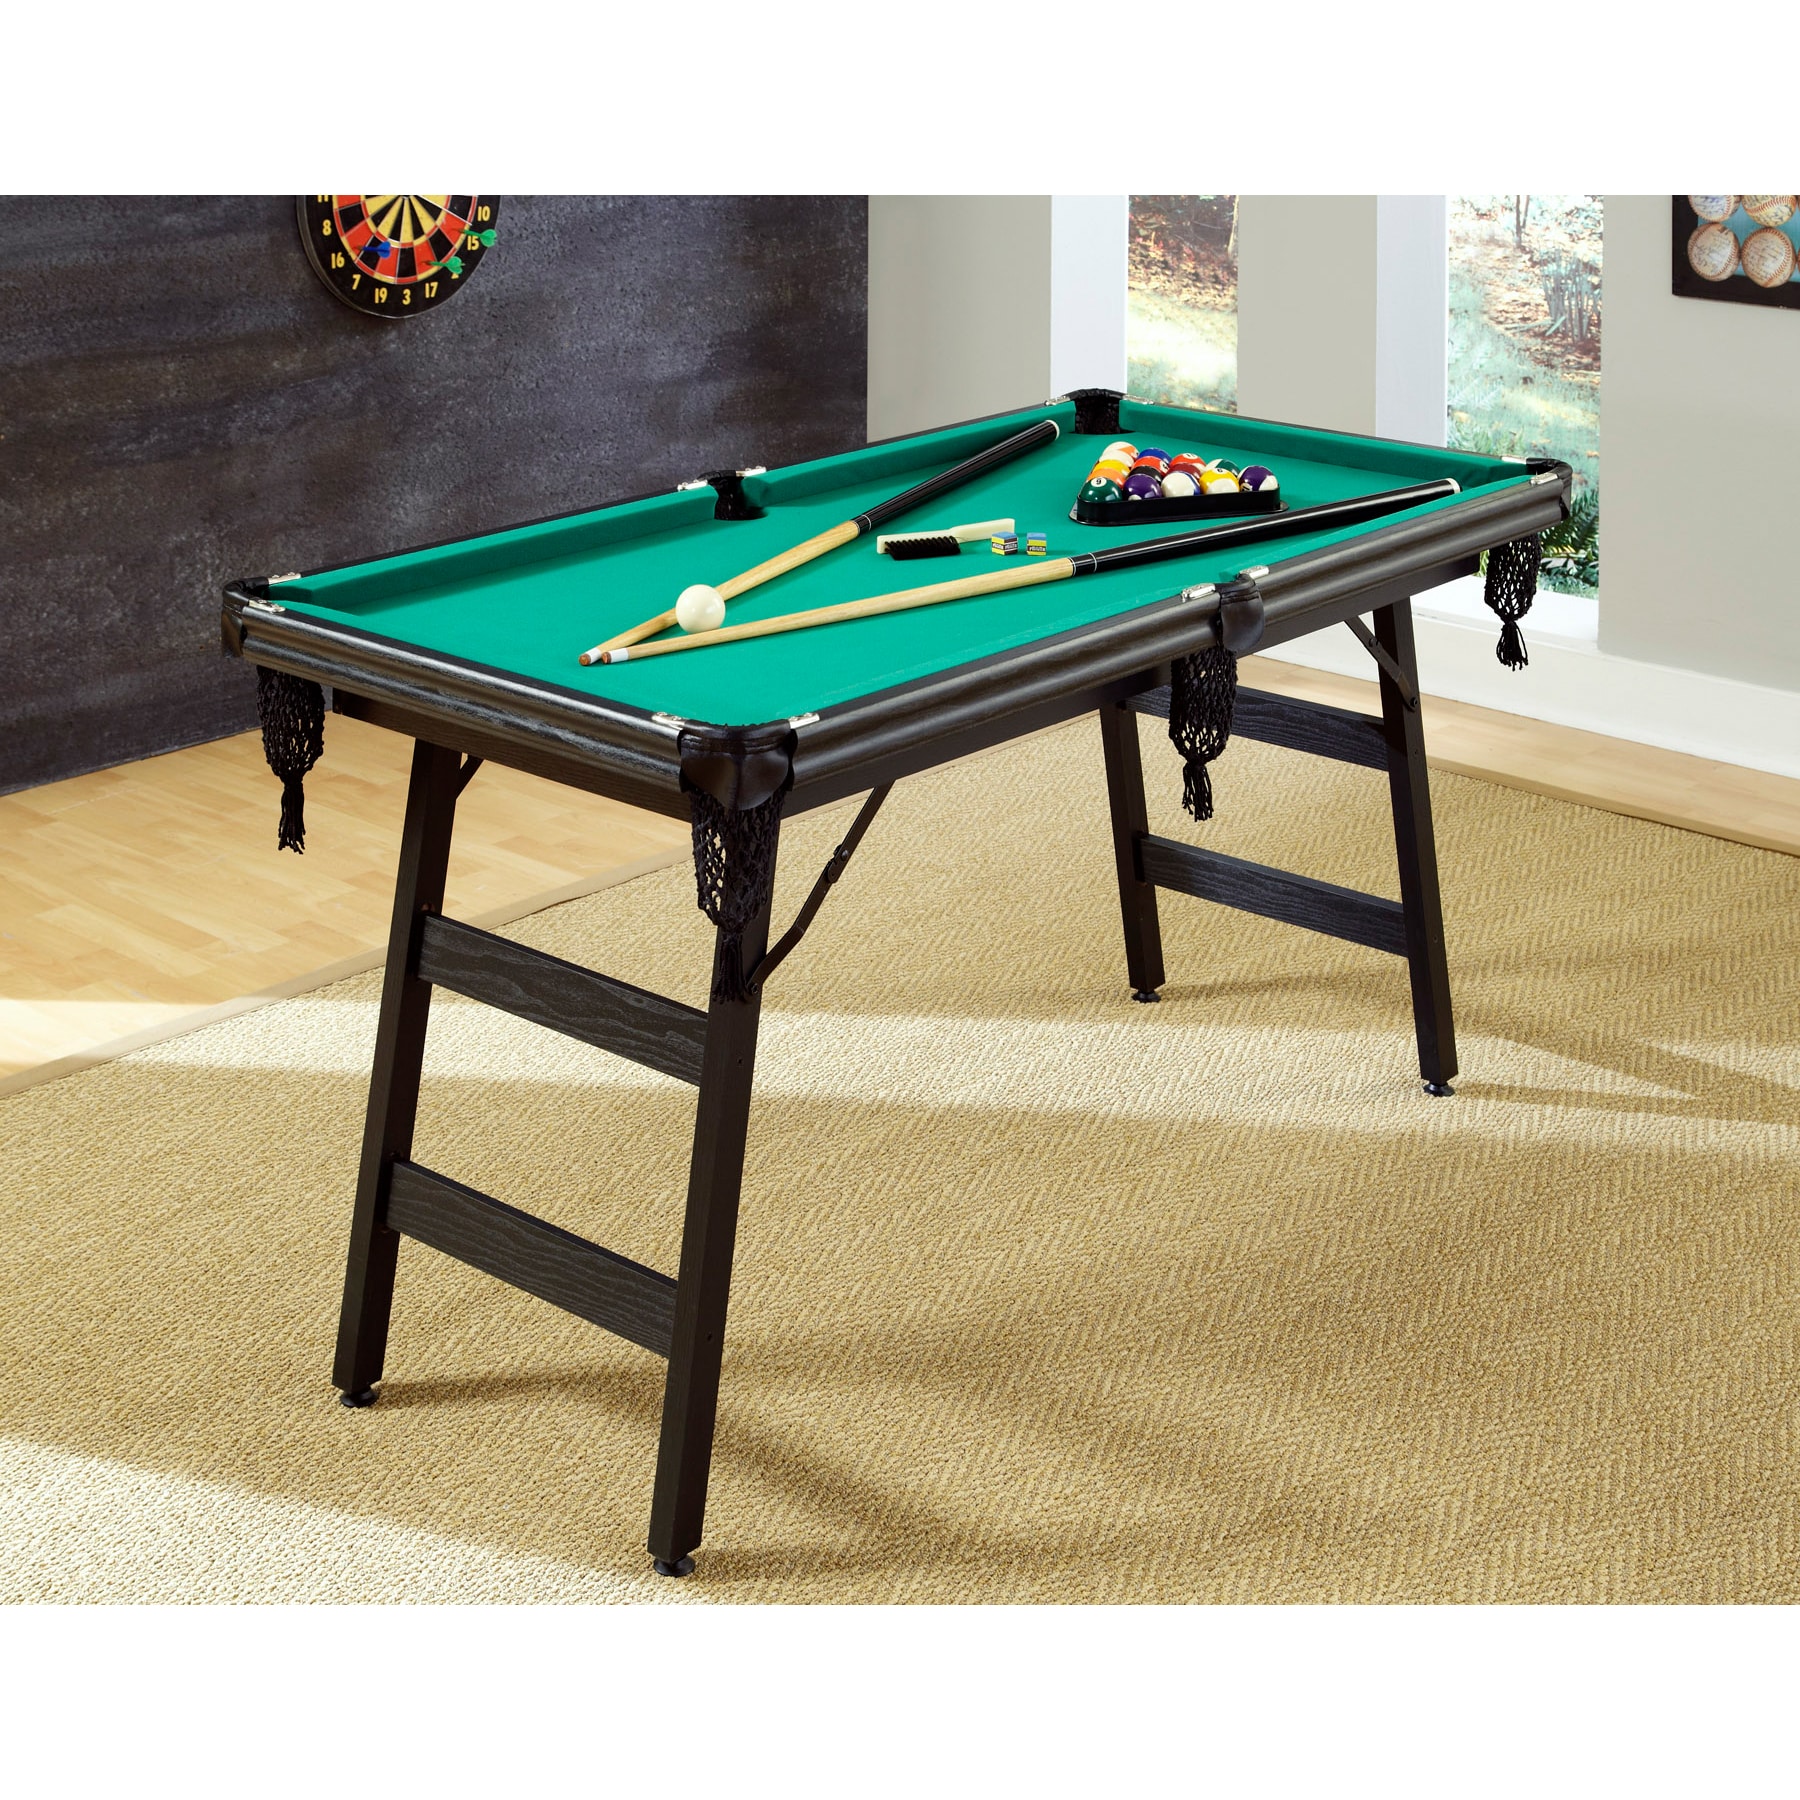 Биллиардный стол на 6 футов. Mini Pool Table 6 ft. Бильярдный стол домашний 8 ФТ. Складной бильярдный стол. Складные бильярдные